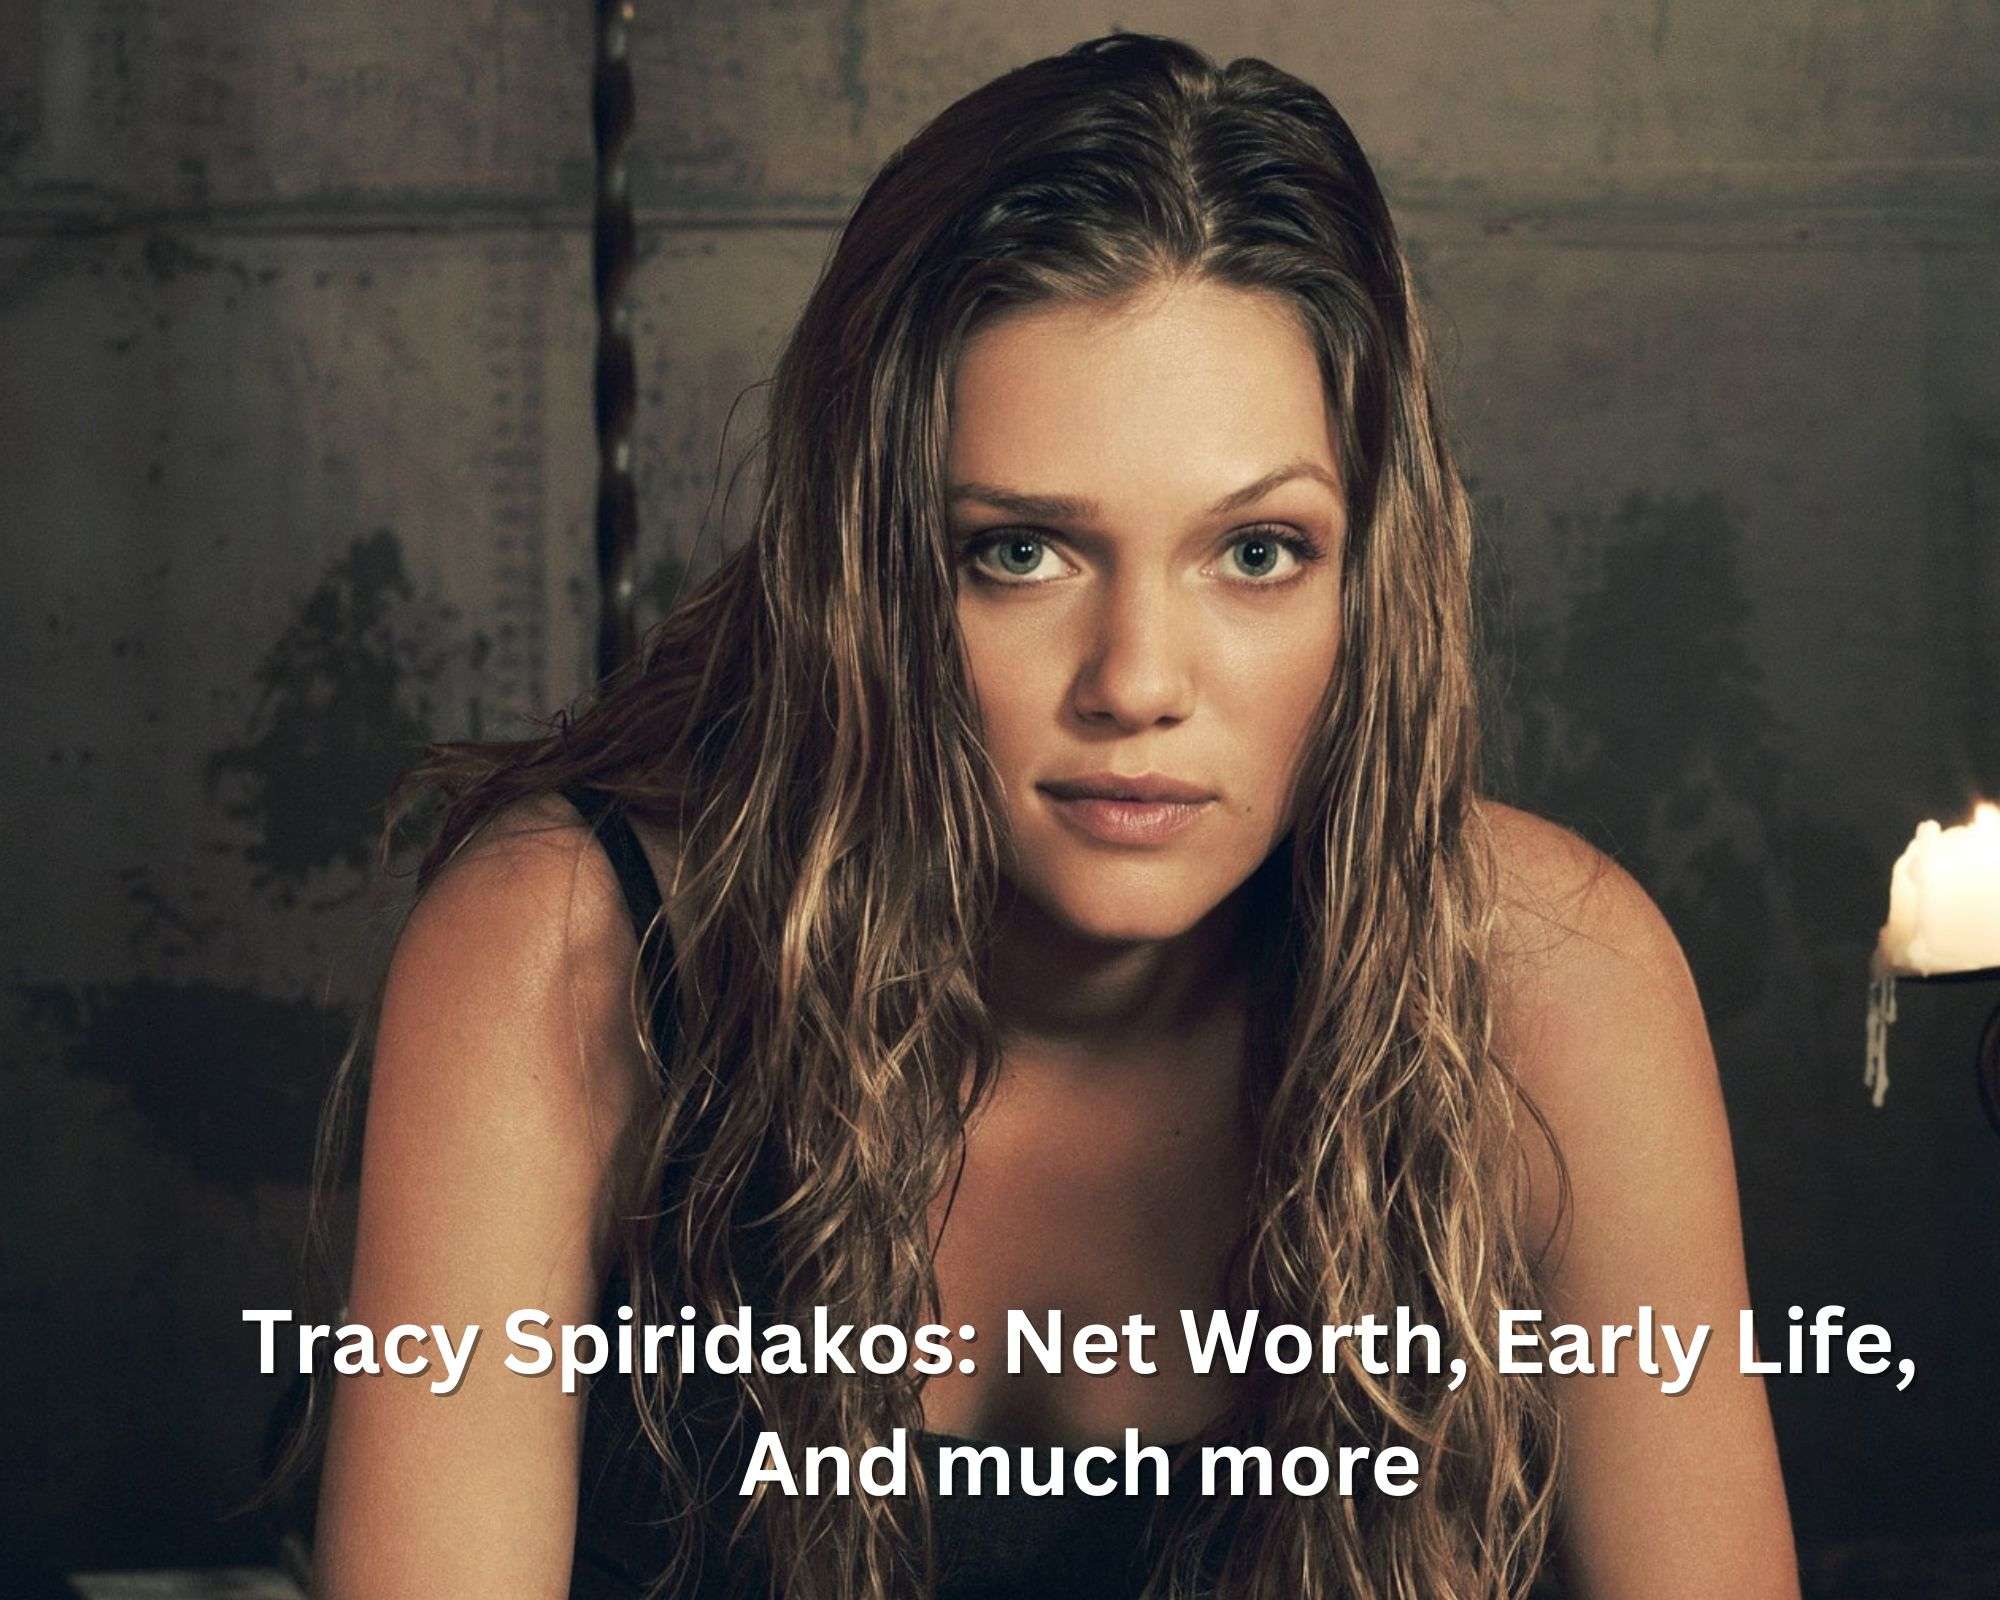 All about Tracy Spiridakos